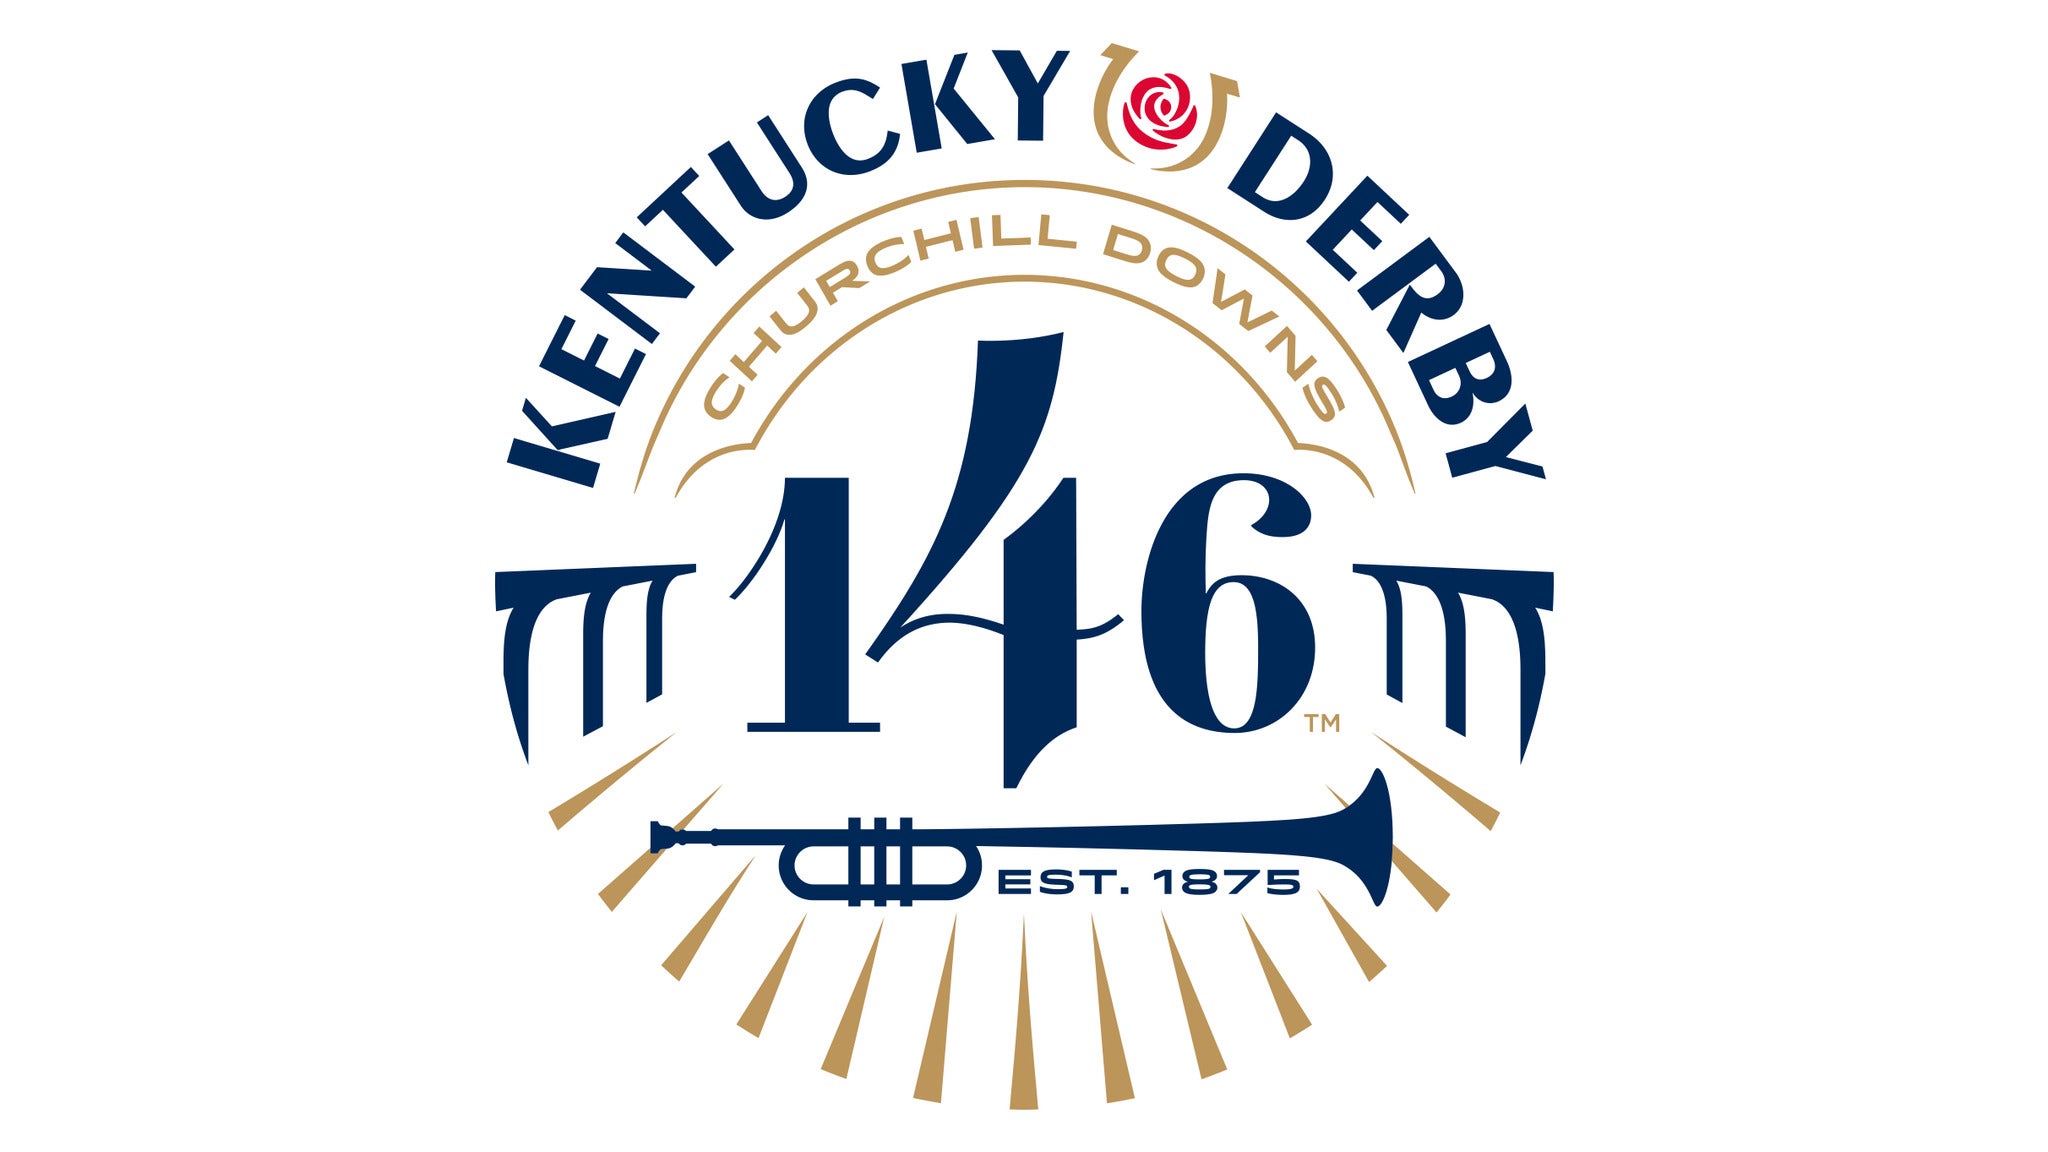 Kentucky Derby presale information on freepresalepasswords.com